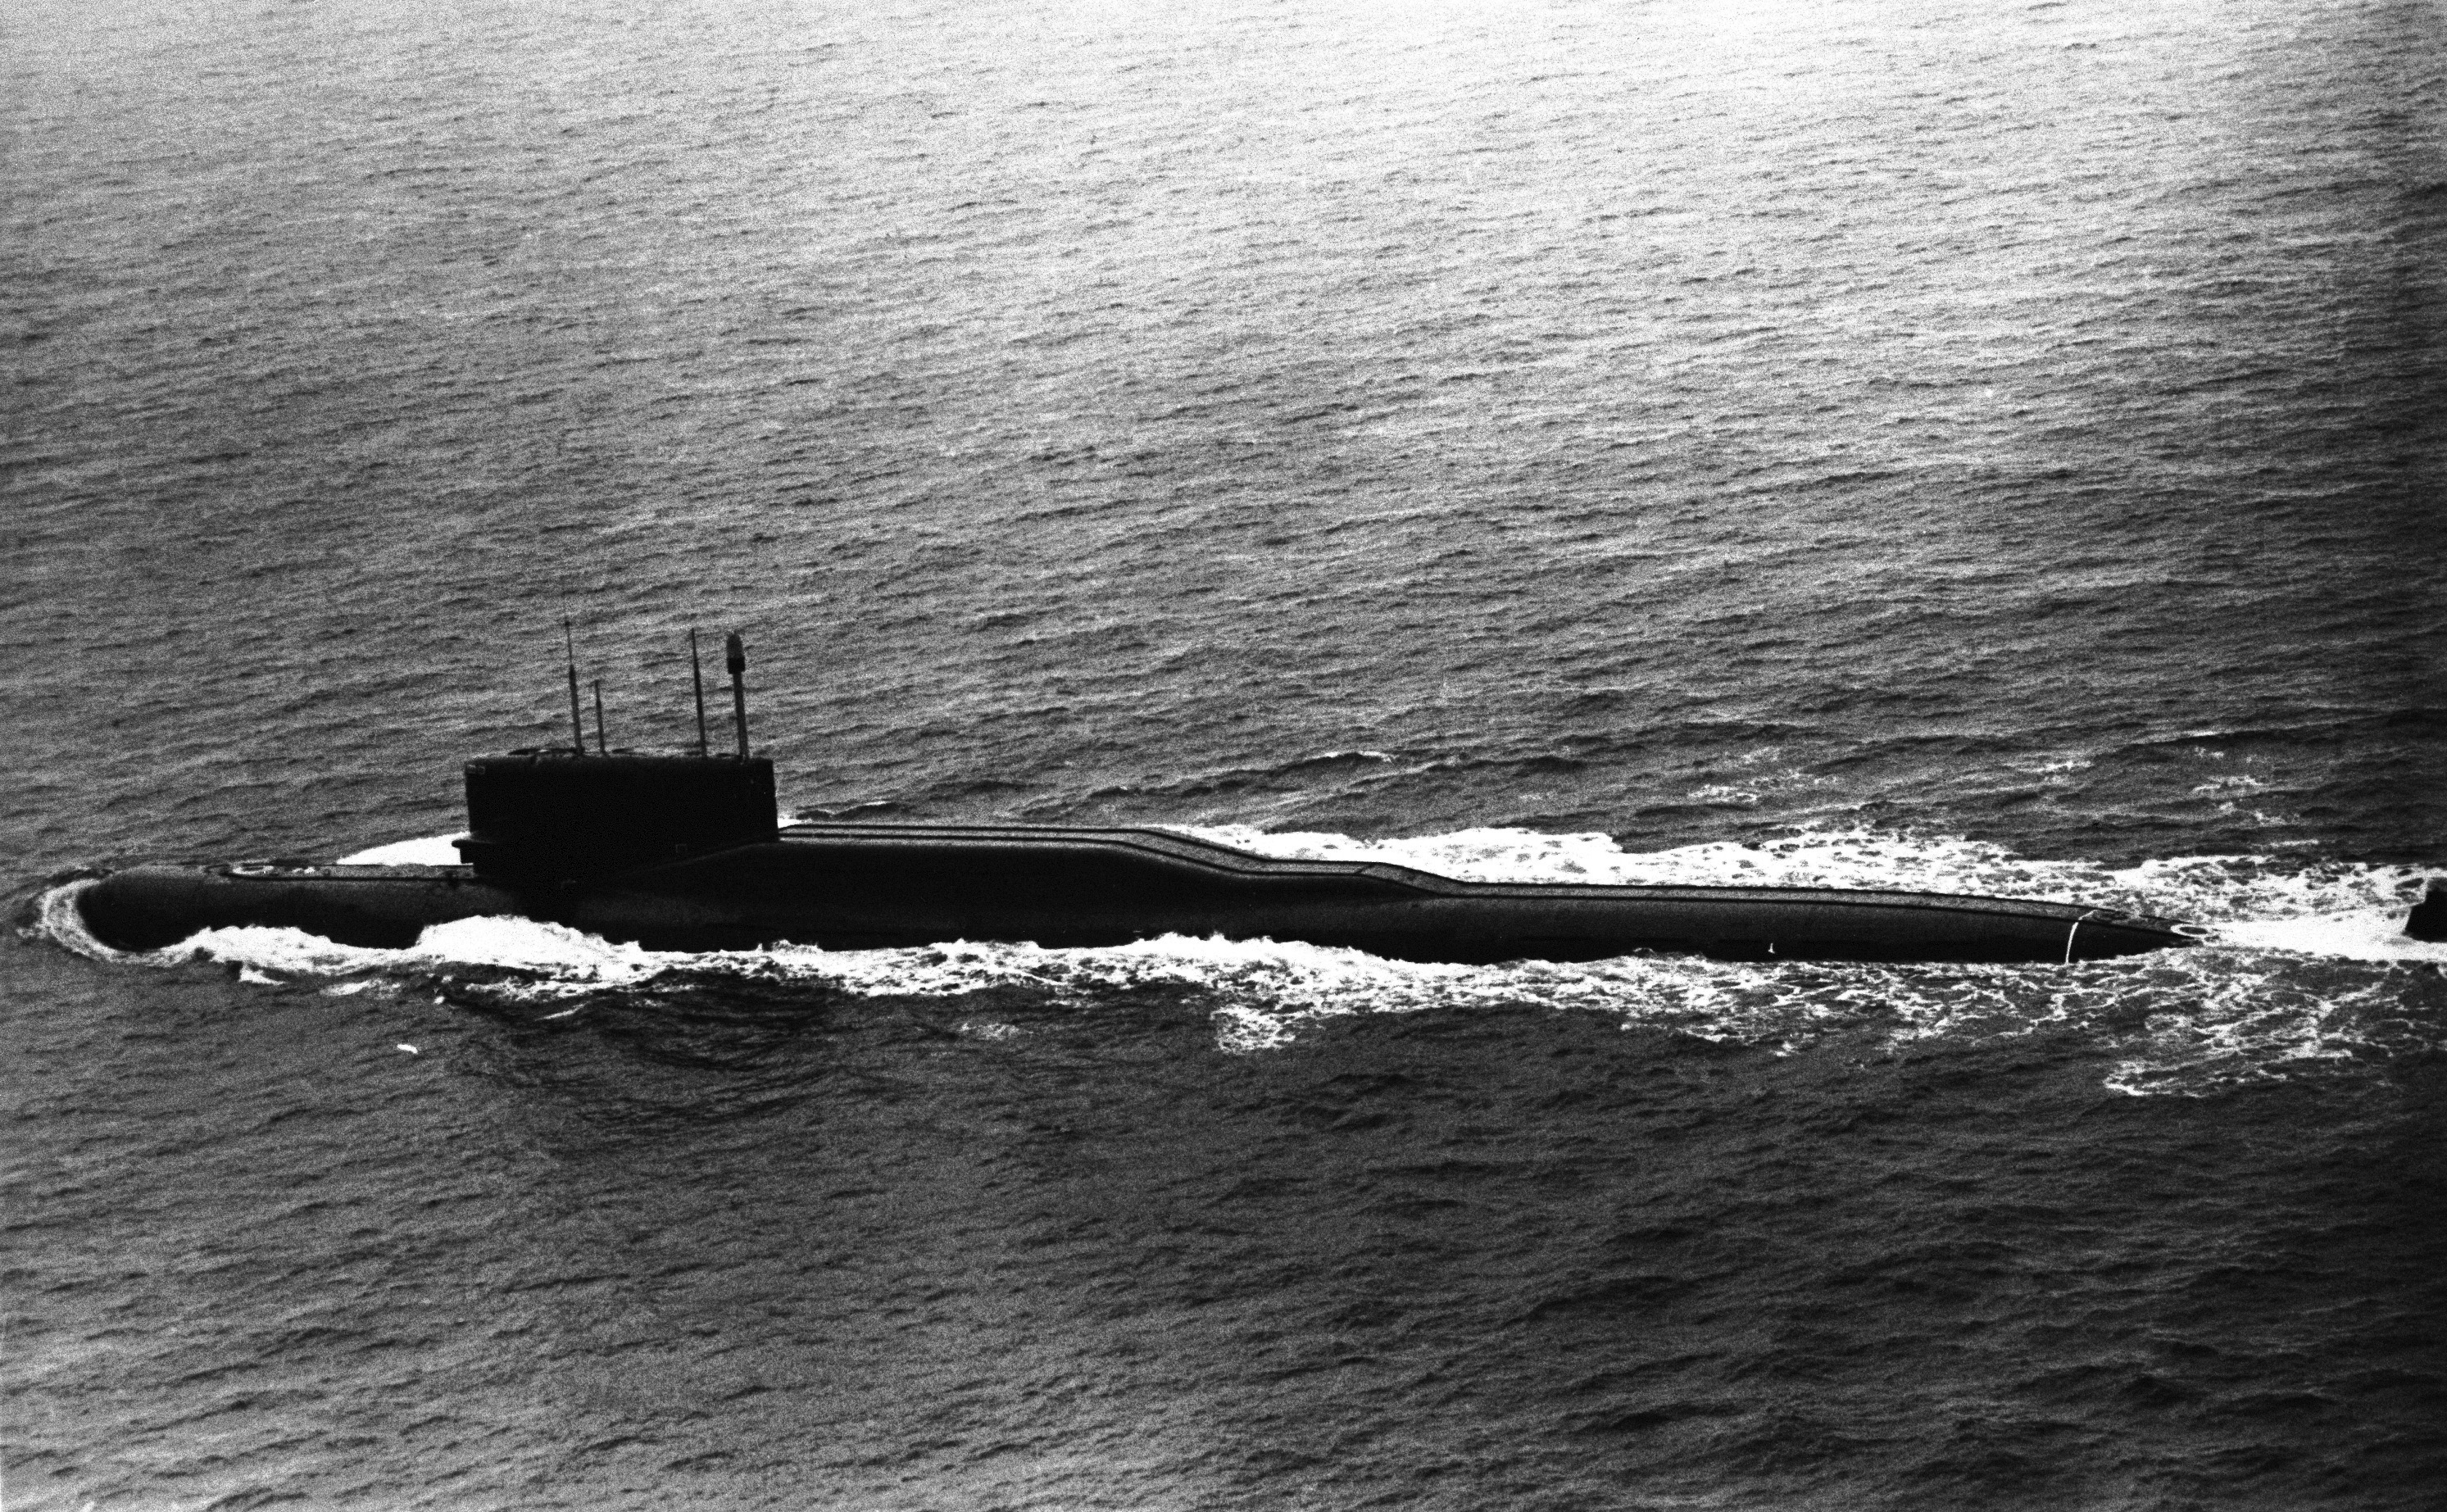 Пл ка. Подводная лодка 667б мурена. Подводная лодка РПКСН 667 Б. Подводная лодка Букаха проект 667. Подводная лодка навага 667 проект.